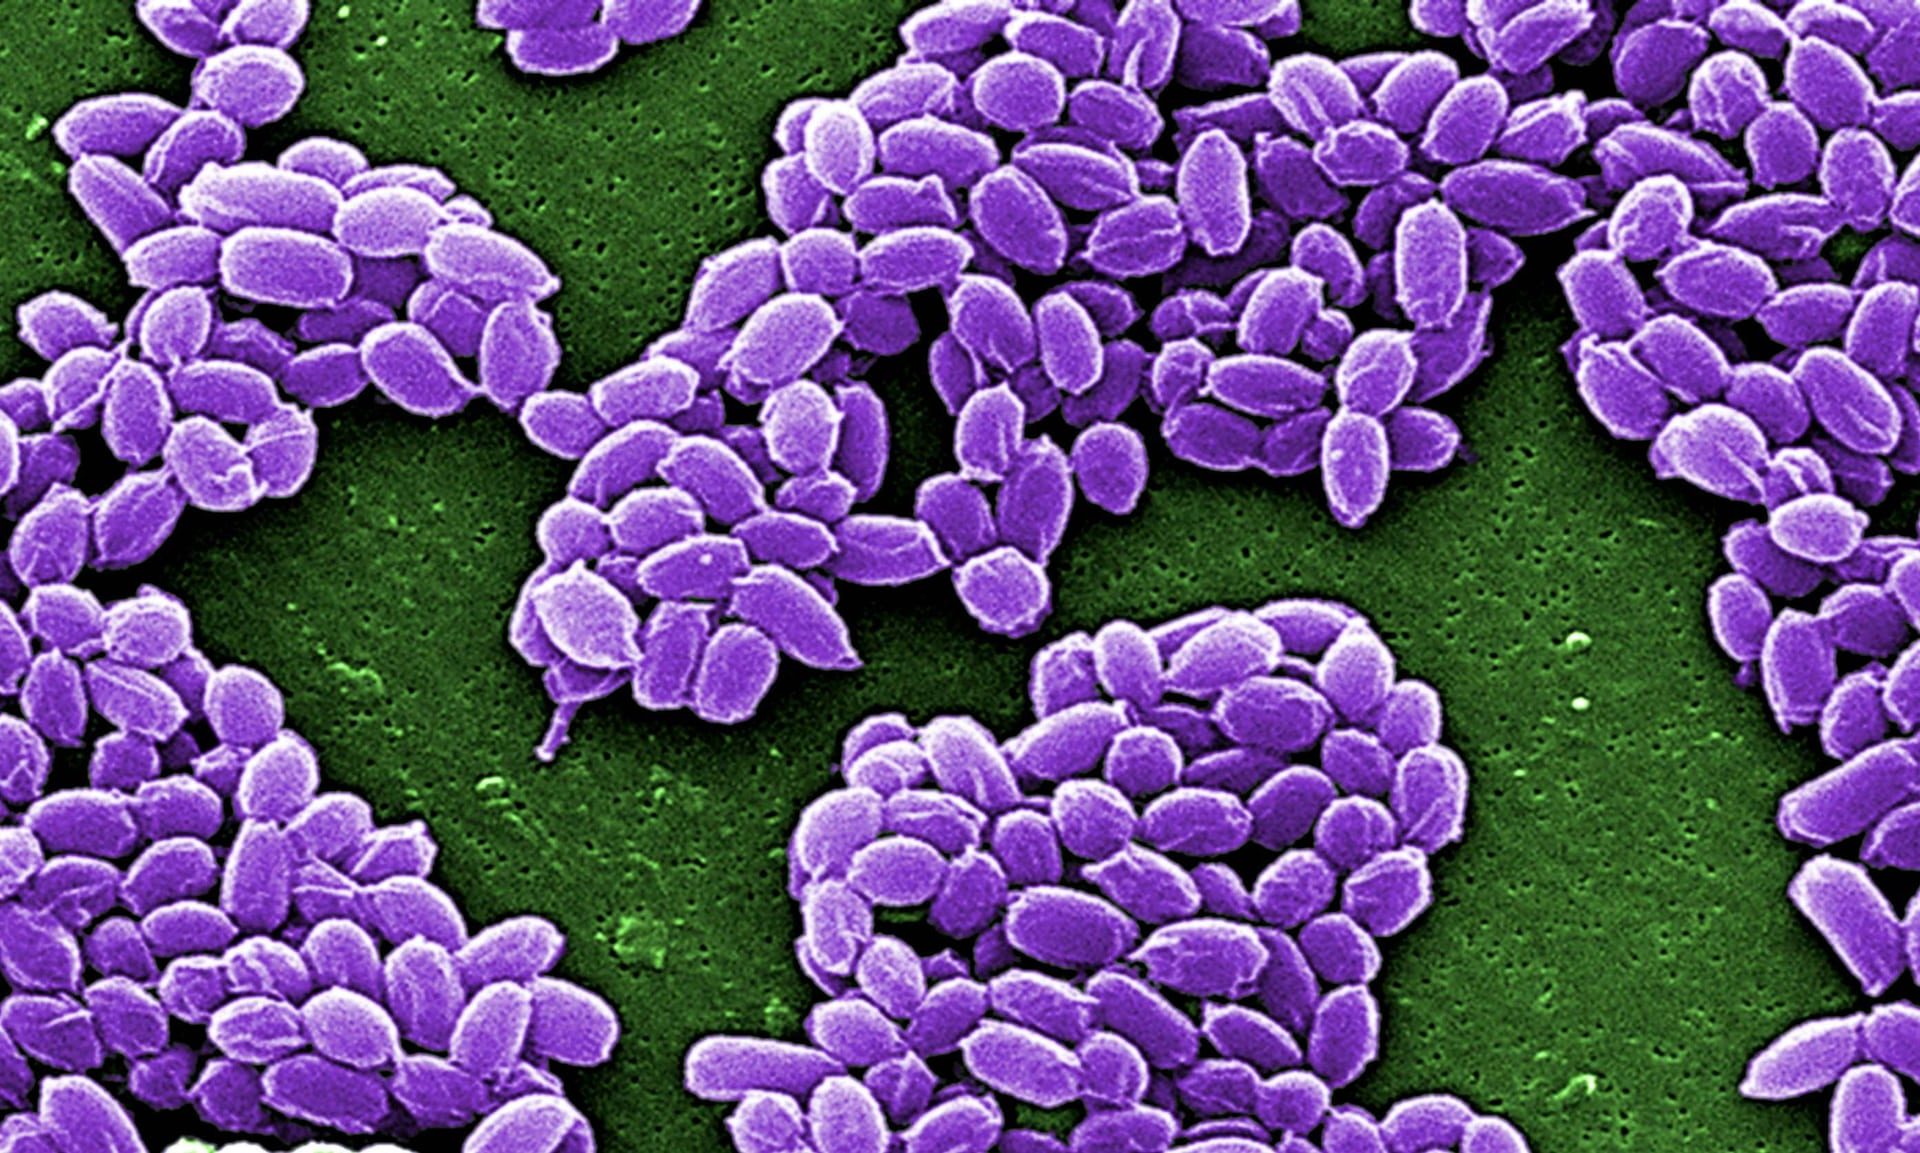 anthrax spores